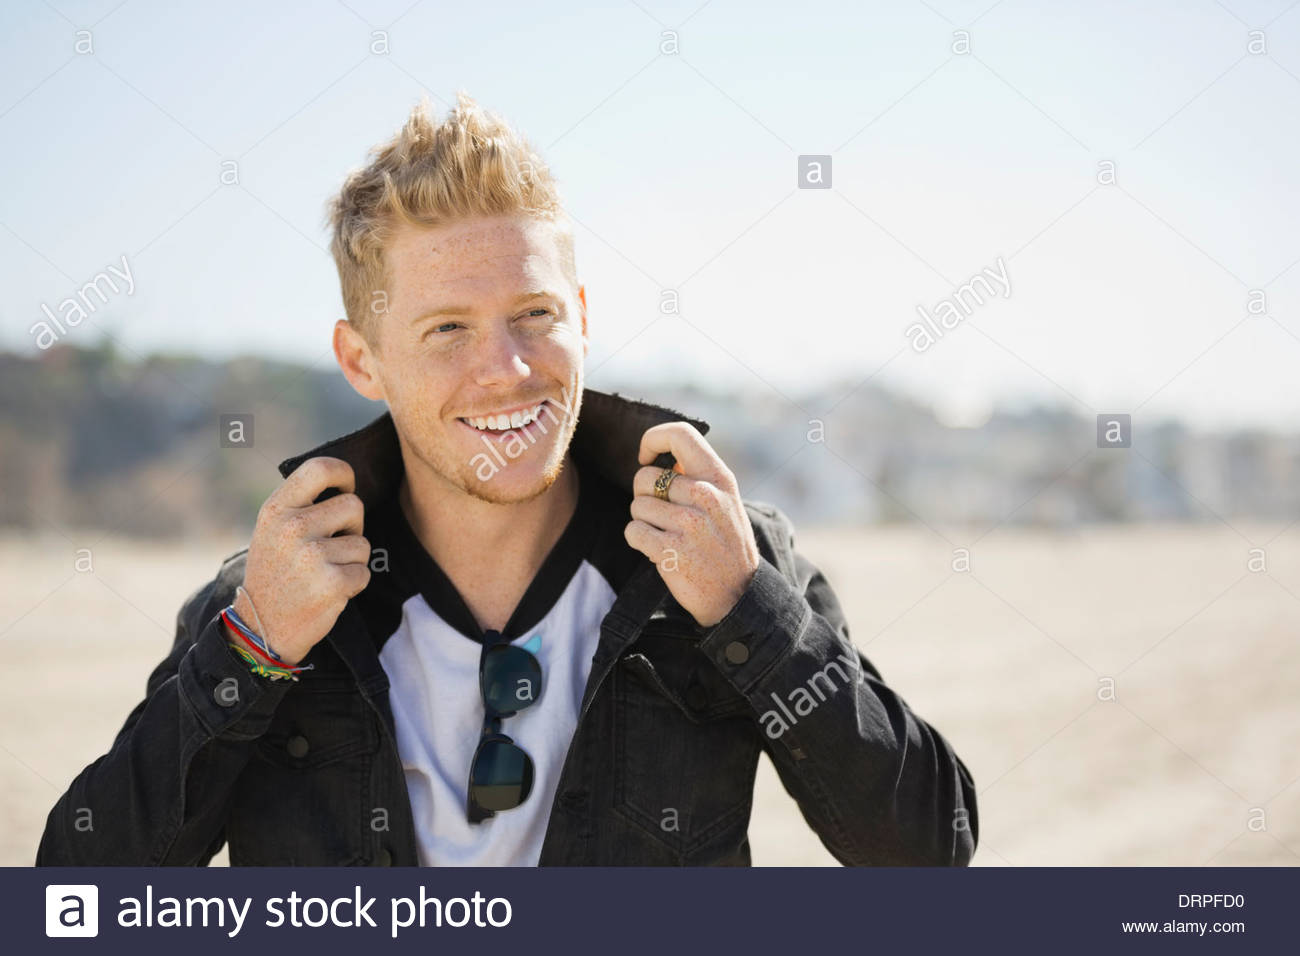 Fashionable man standing on beach Stock Photo